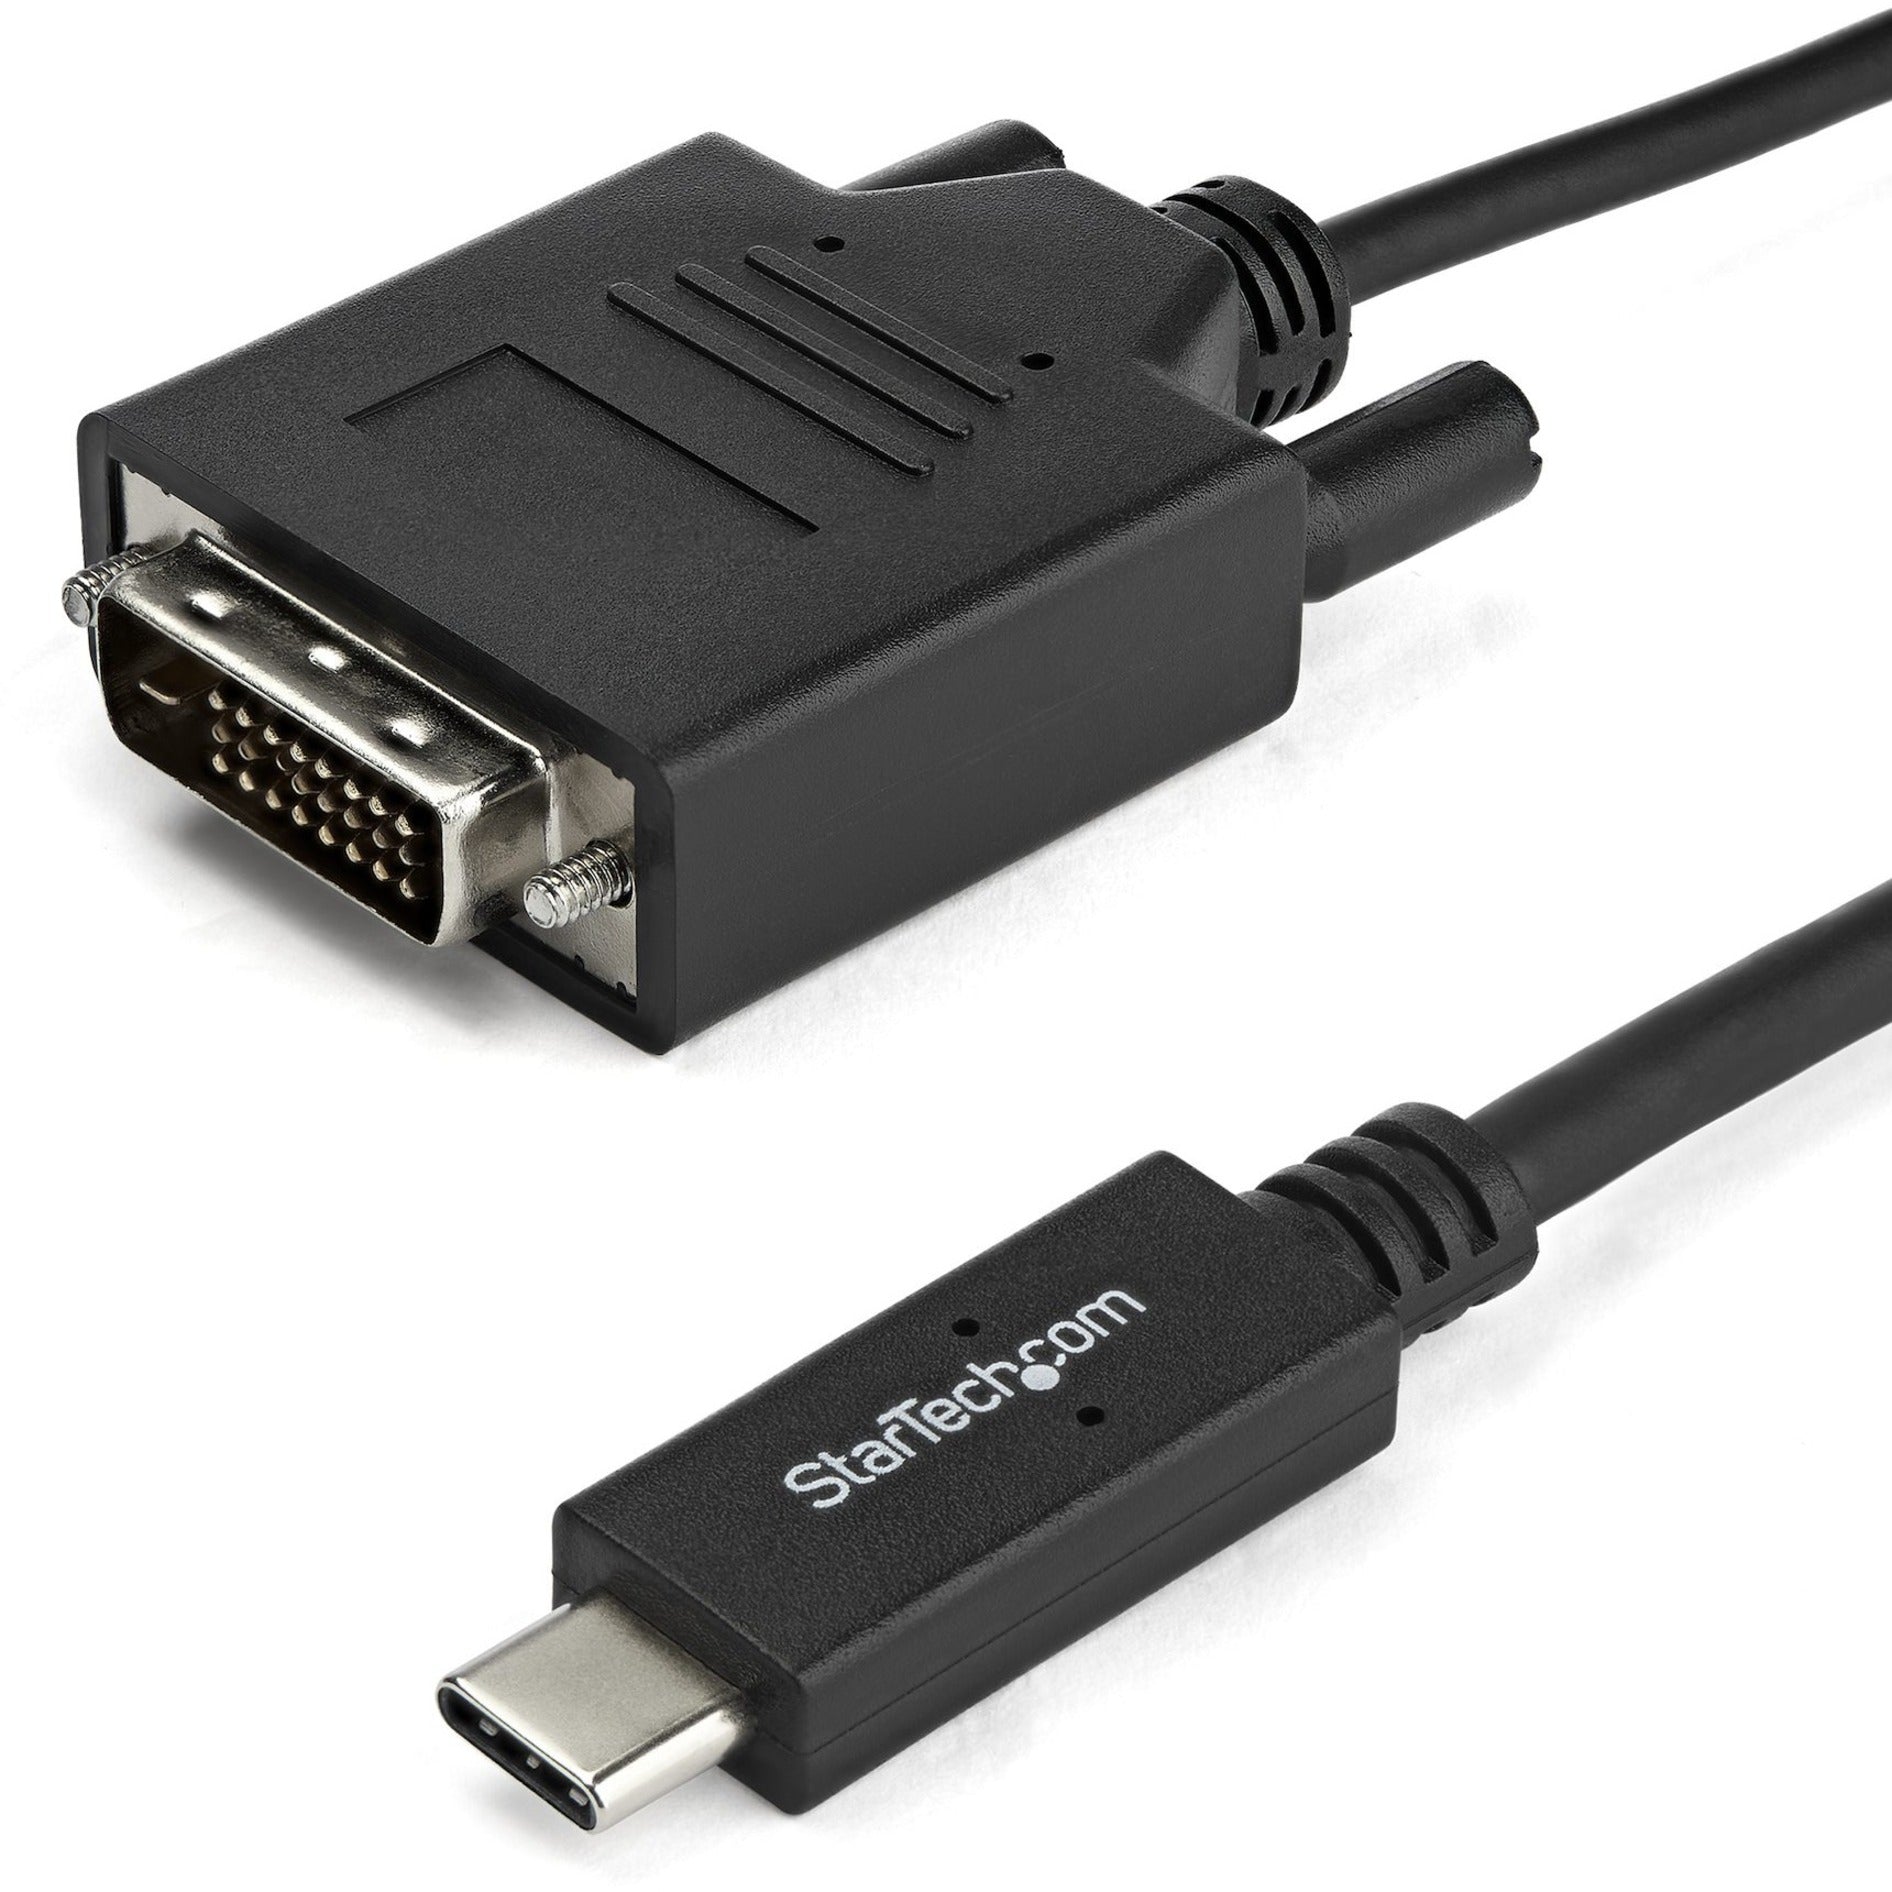 StarTech.com CDP2DVIMM1MB USB-C to DVI Adapter Cable - USB Type-C to DVI Converter, 1m 3 ft., 2560x1600, Plug & Play